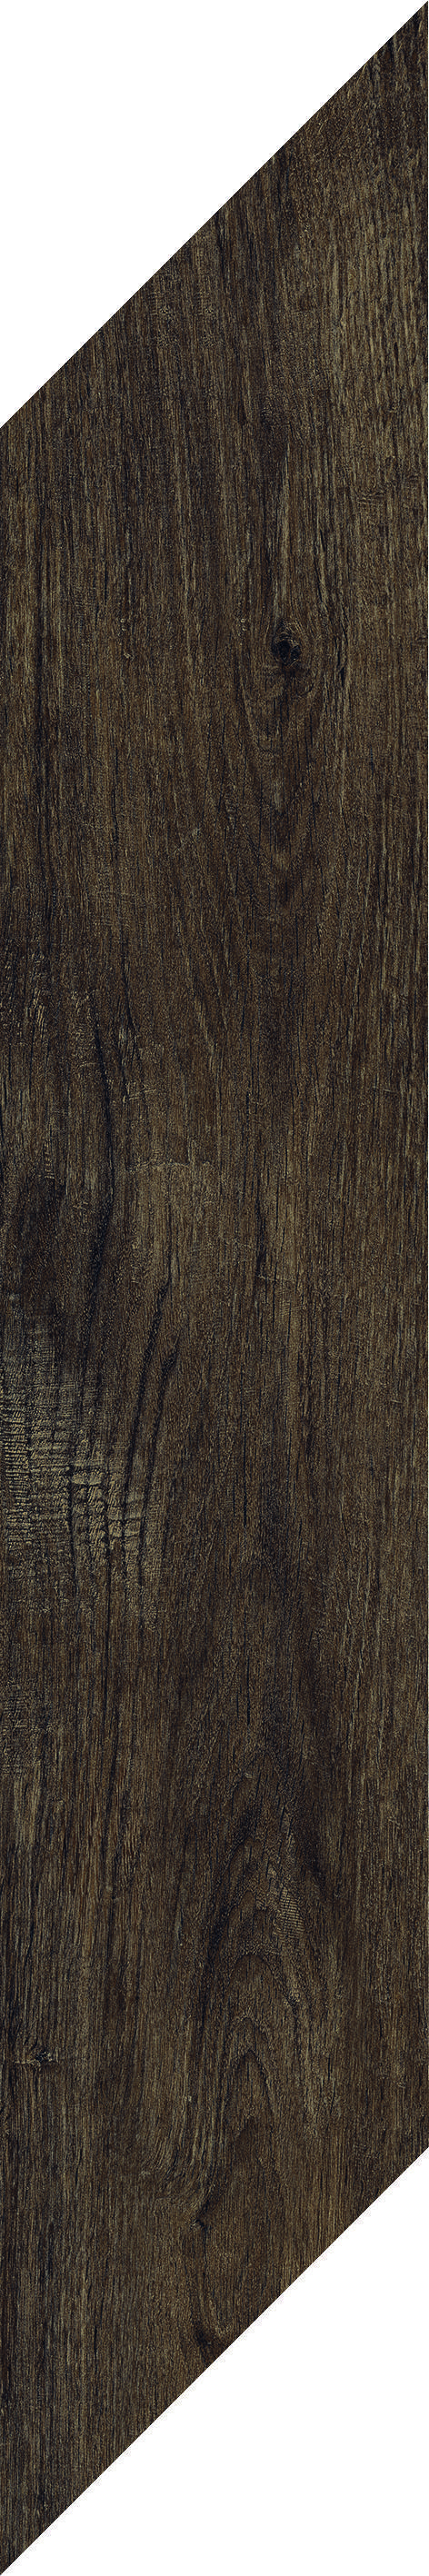 Caesar Arthis Royal Naturale – Matt Chevron AD61 20x120cm rectified 9mm